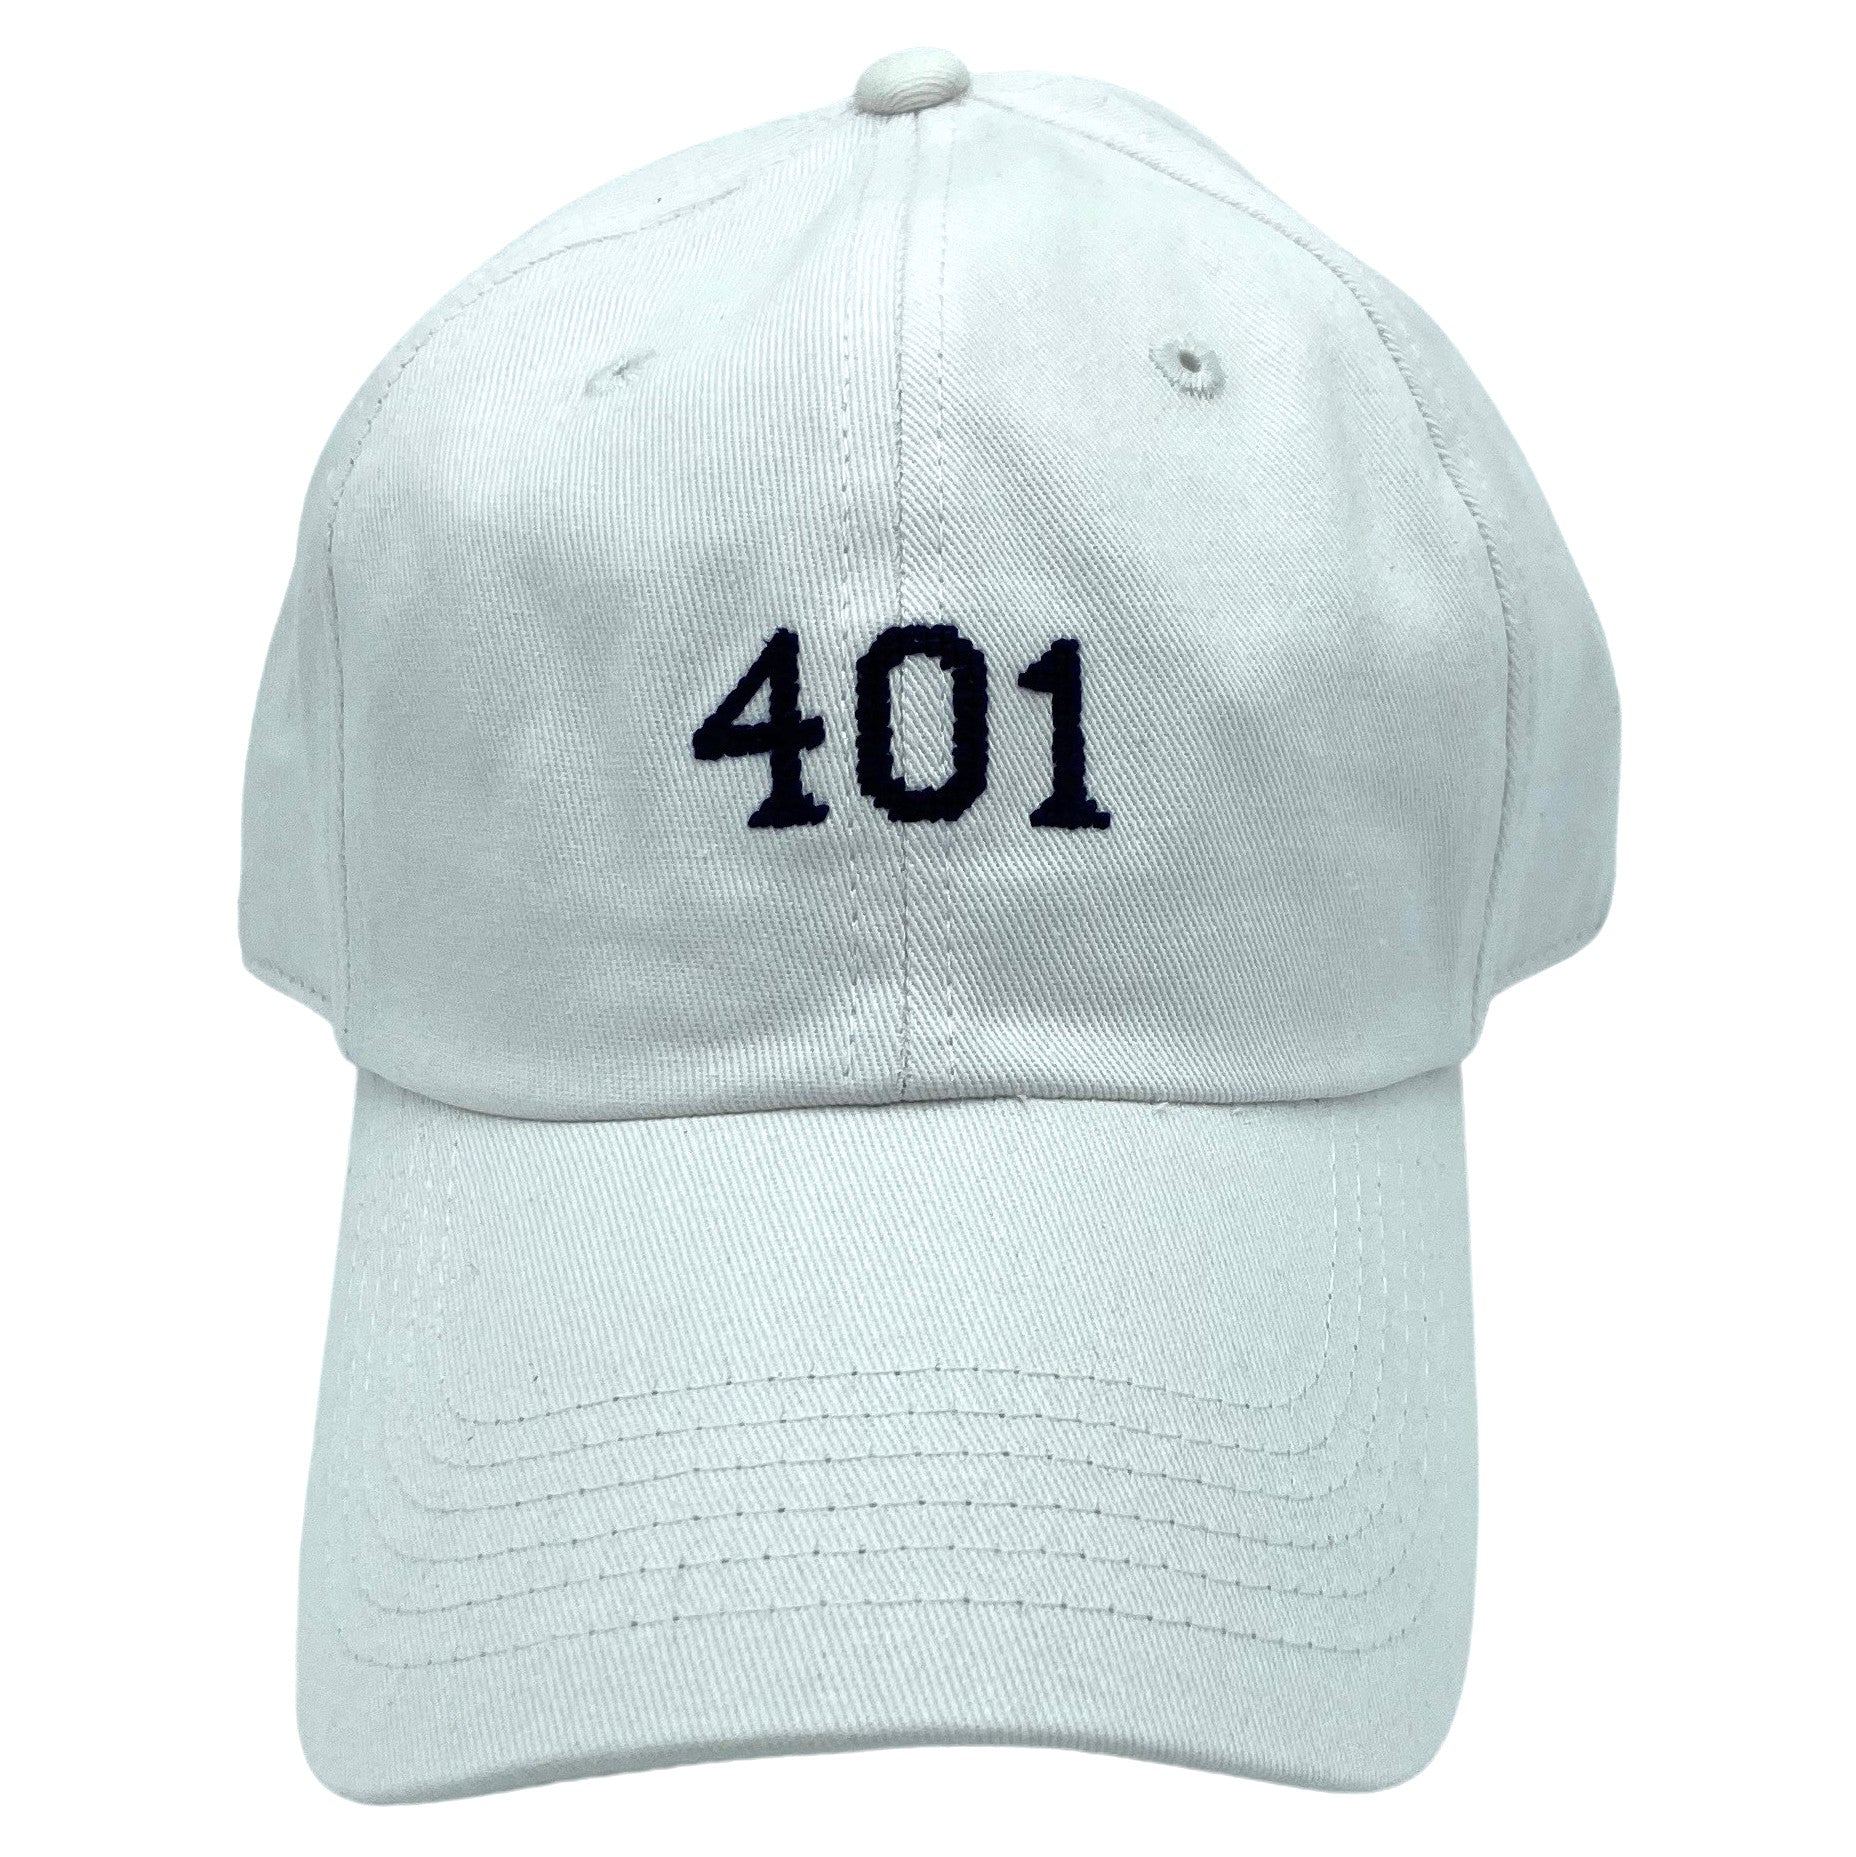 401 on snow white hat